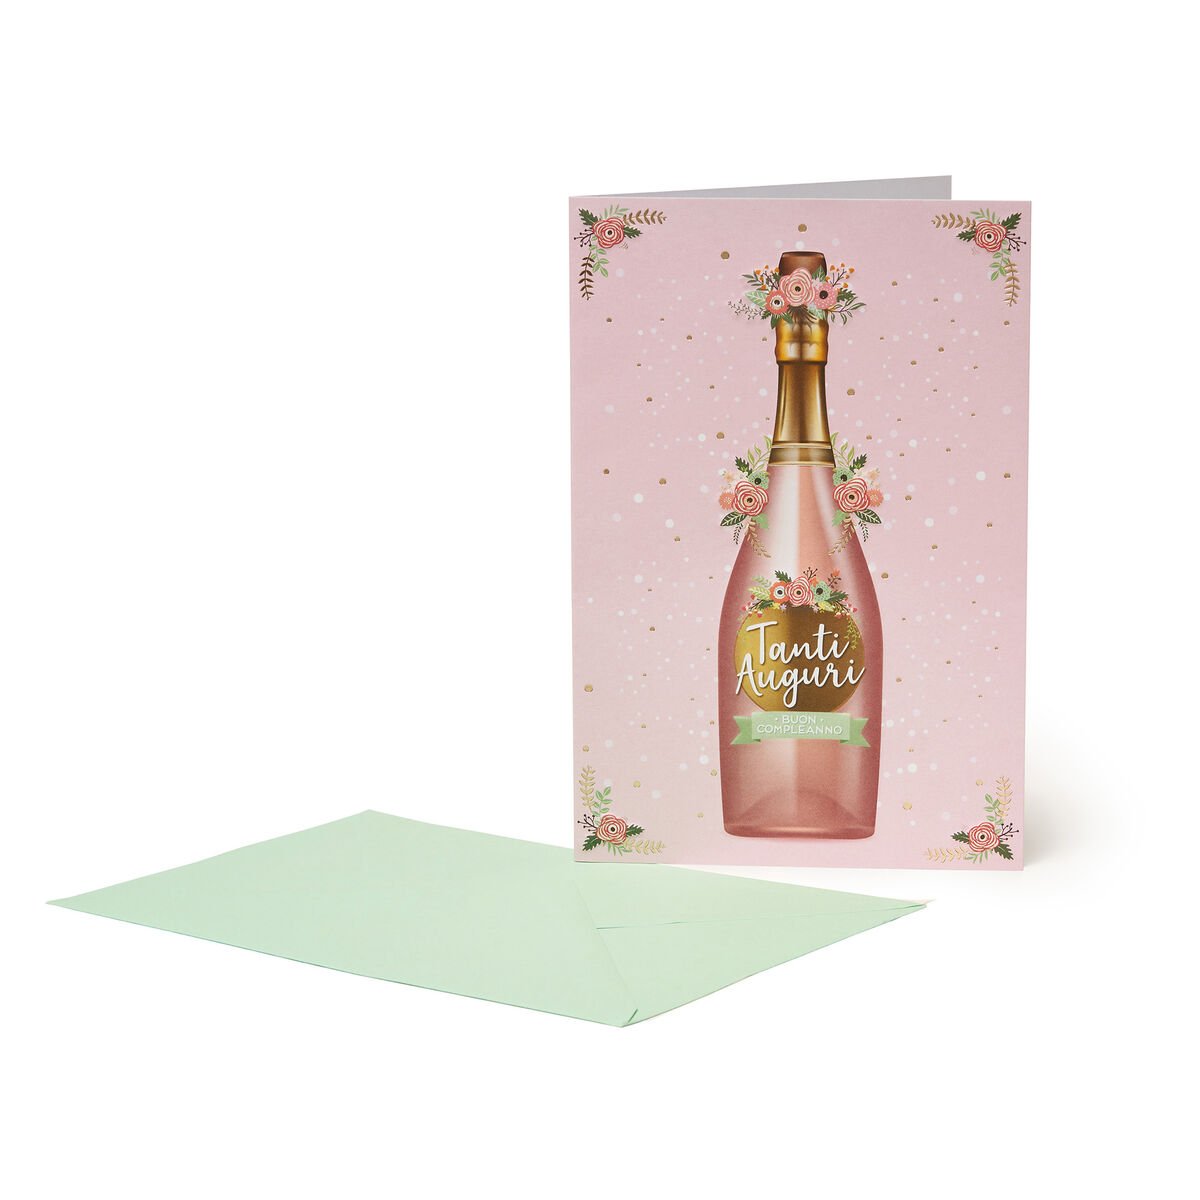 Glückwunschkarte Geburtstag - Champagne, , zoo